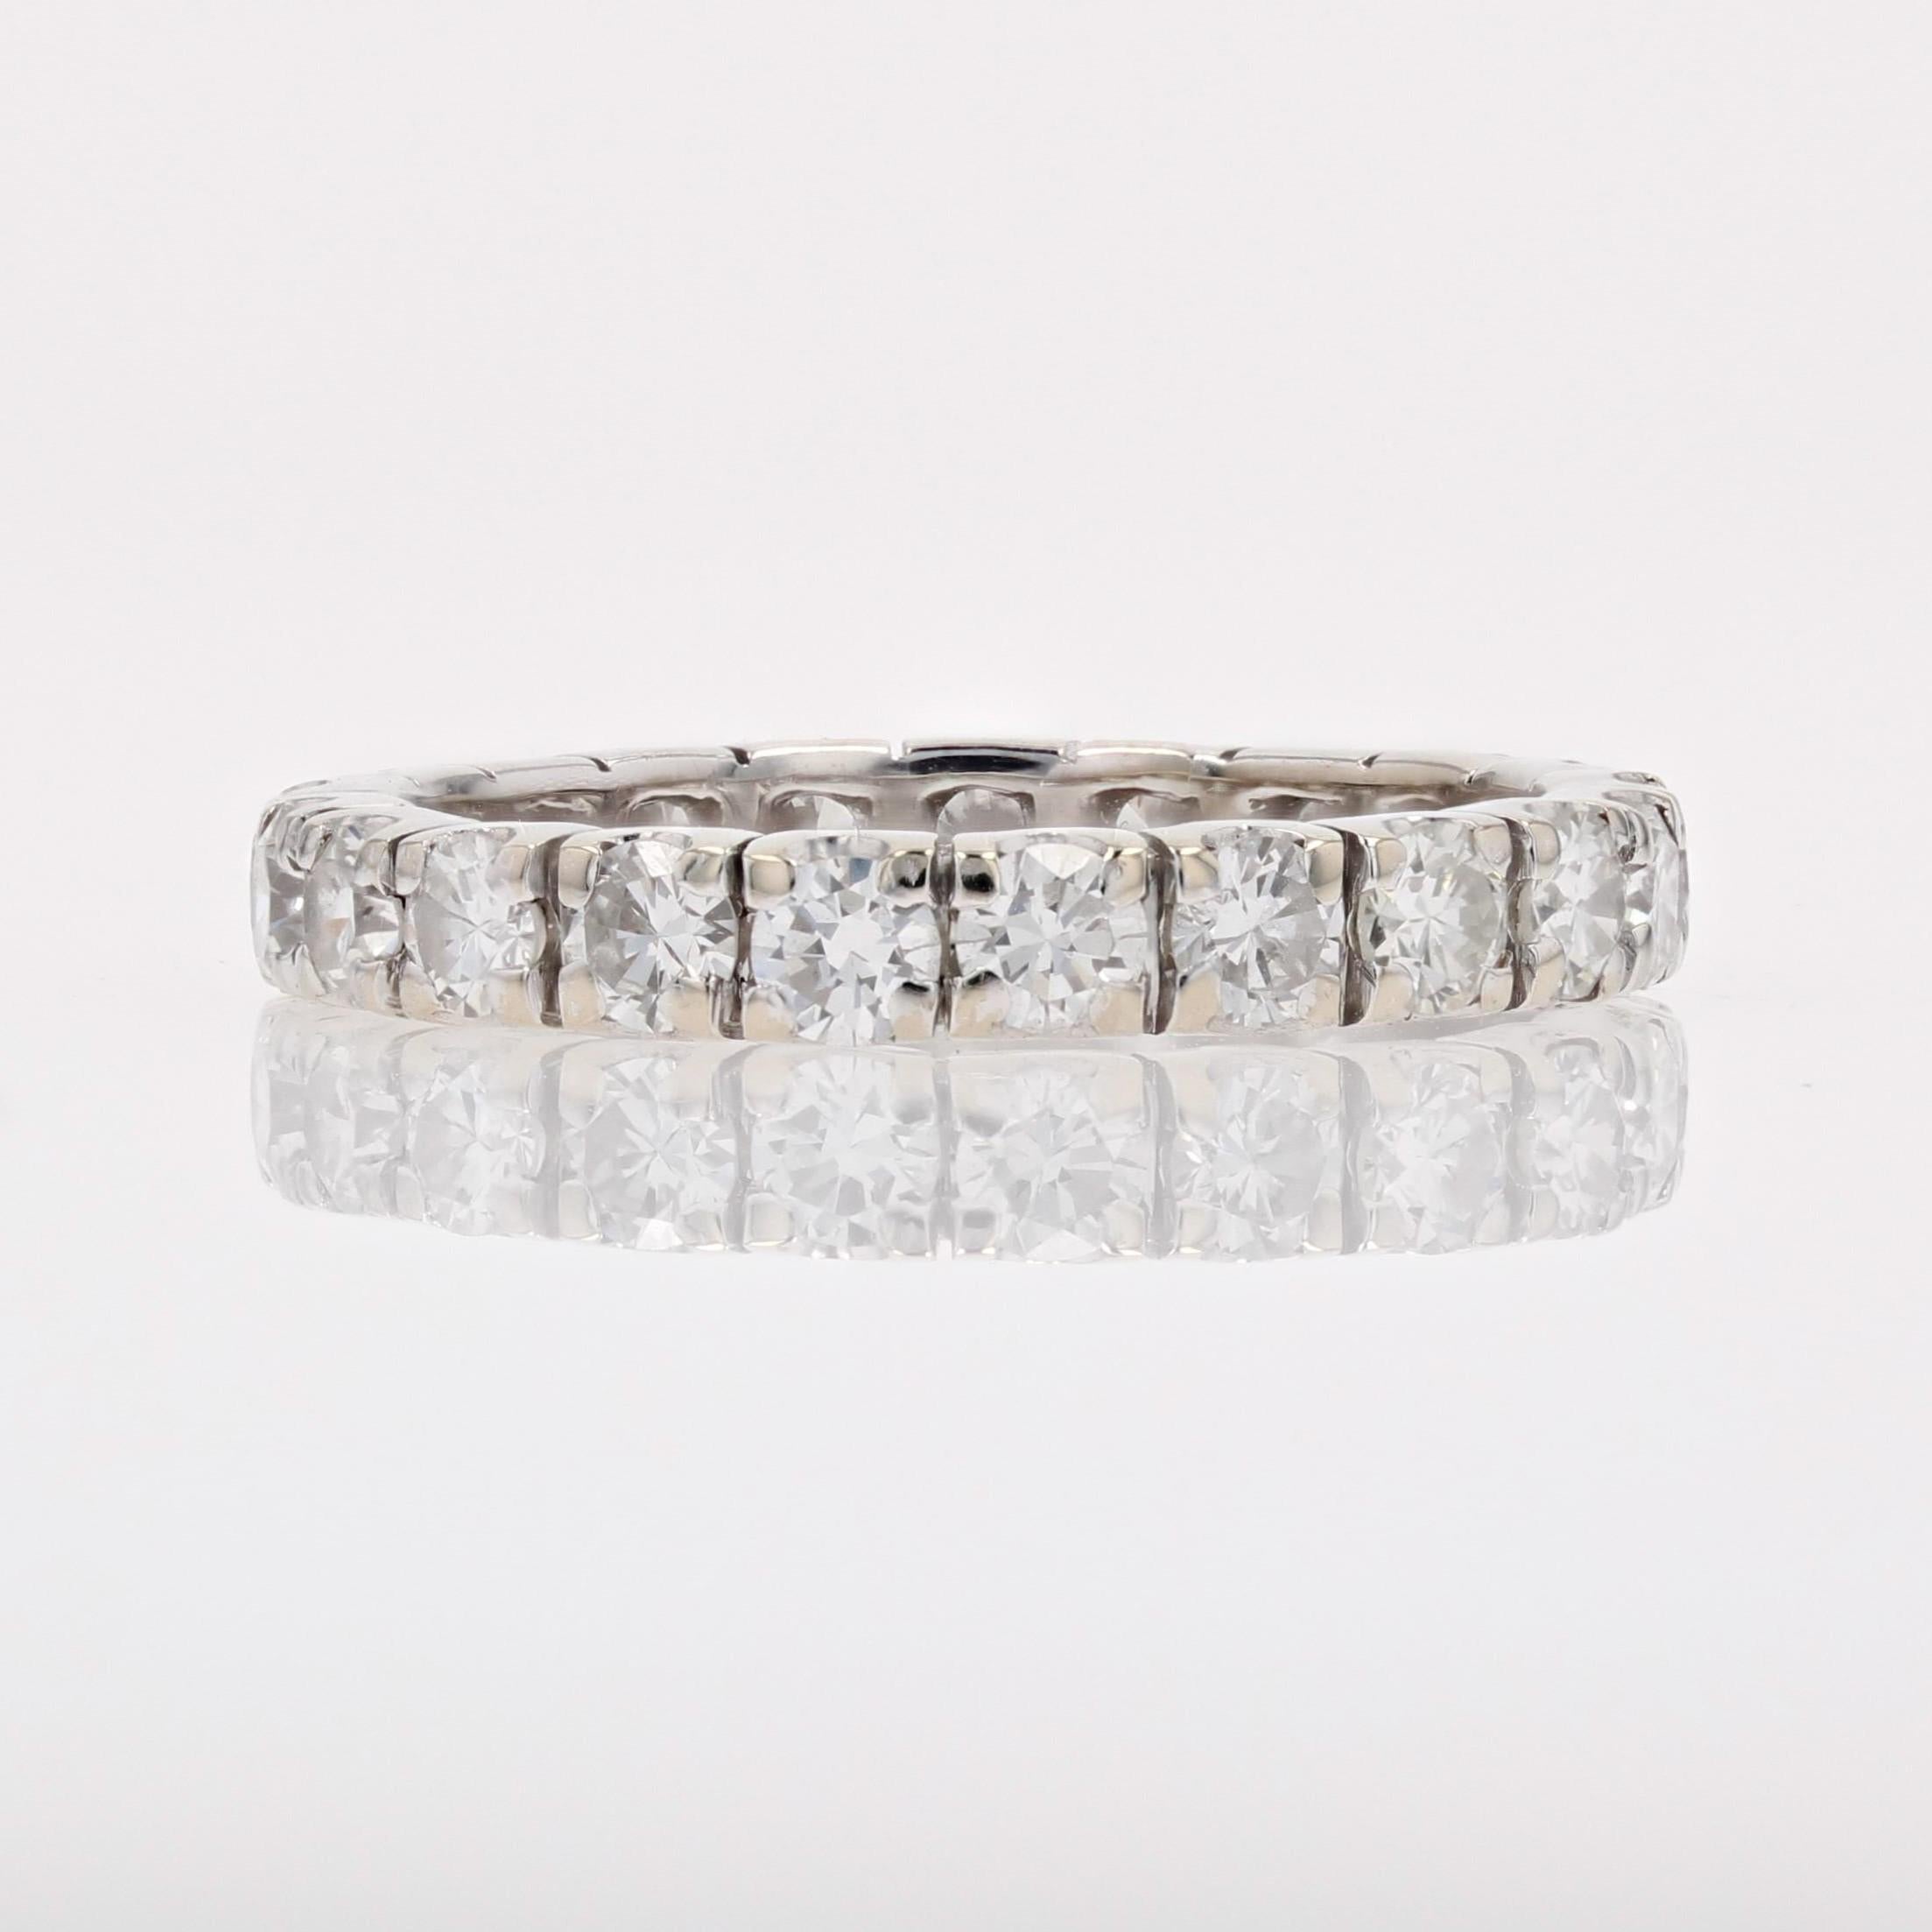 French Modern Diamonds 18 Karat White Gold Band Wedding Ring For Sale 7